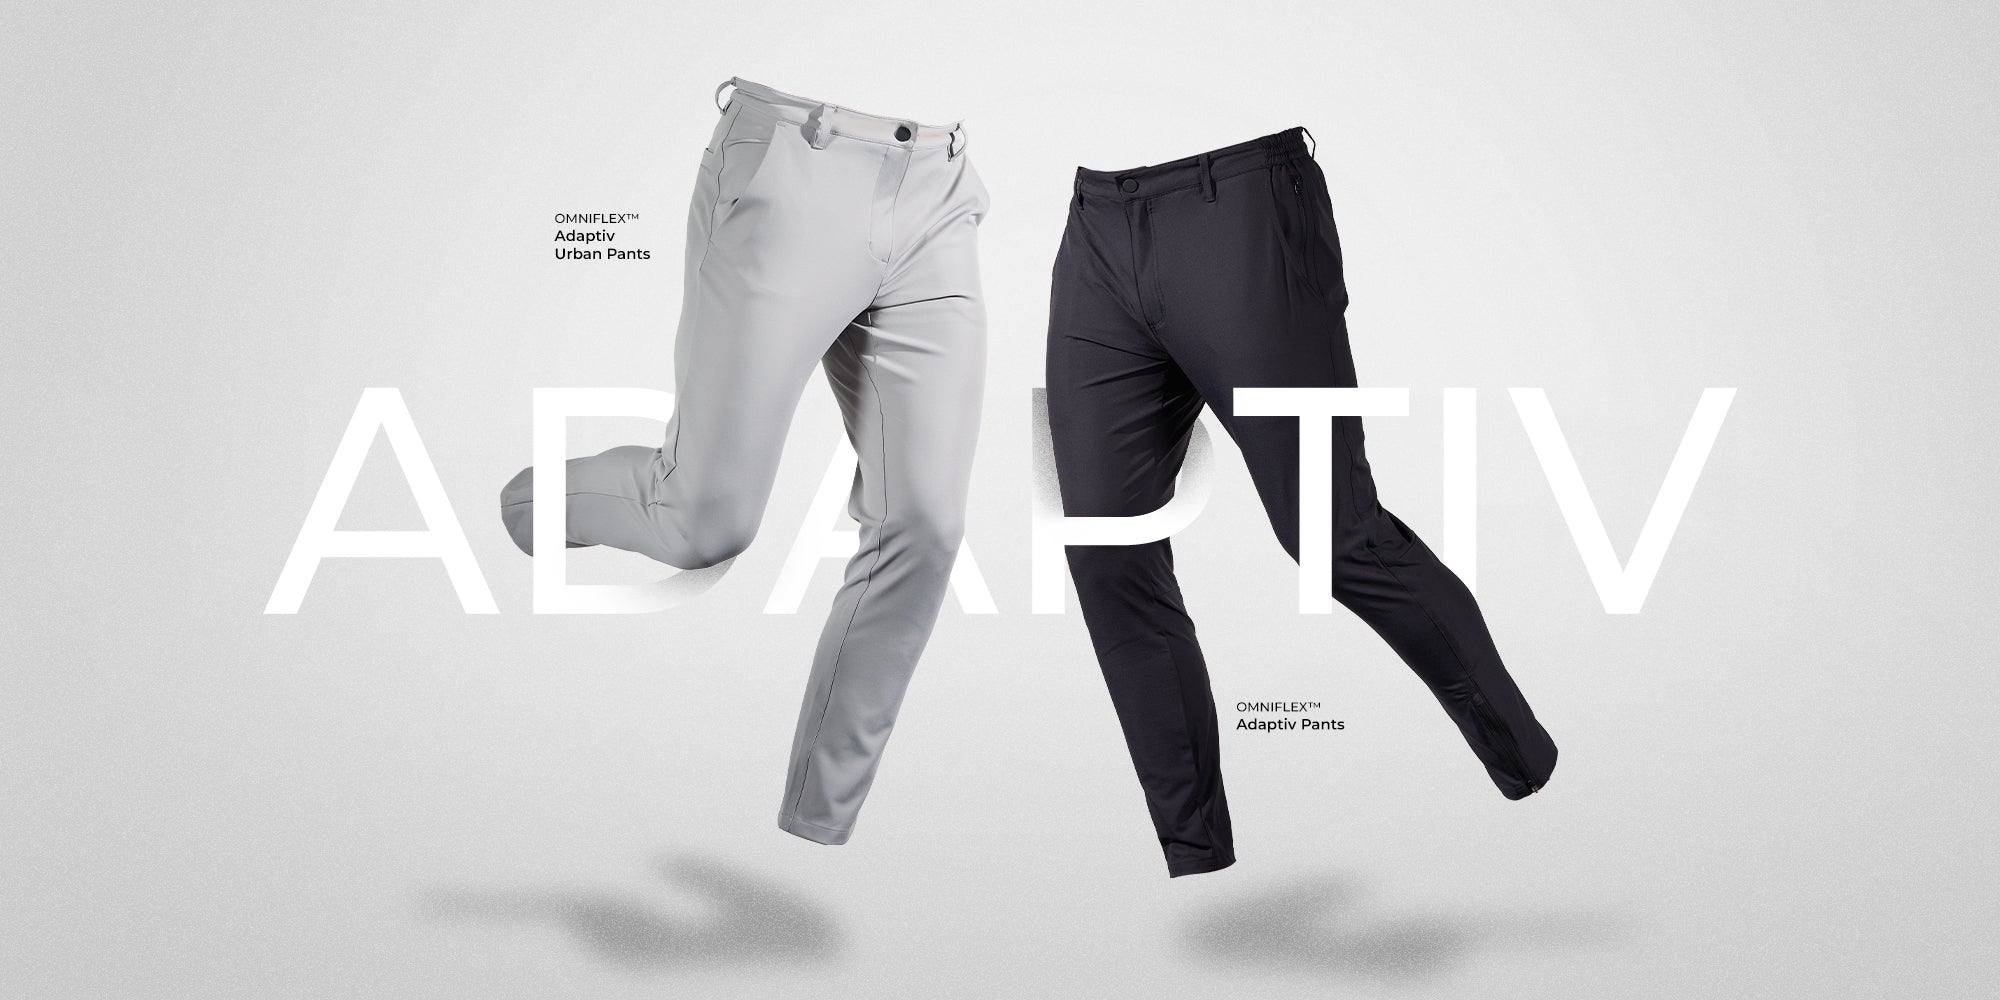 OMNIFLEX™ Adaptiv Urban Pants